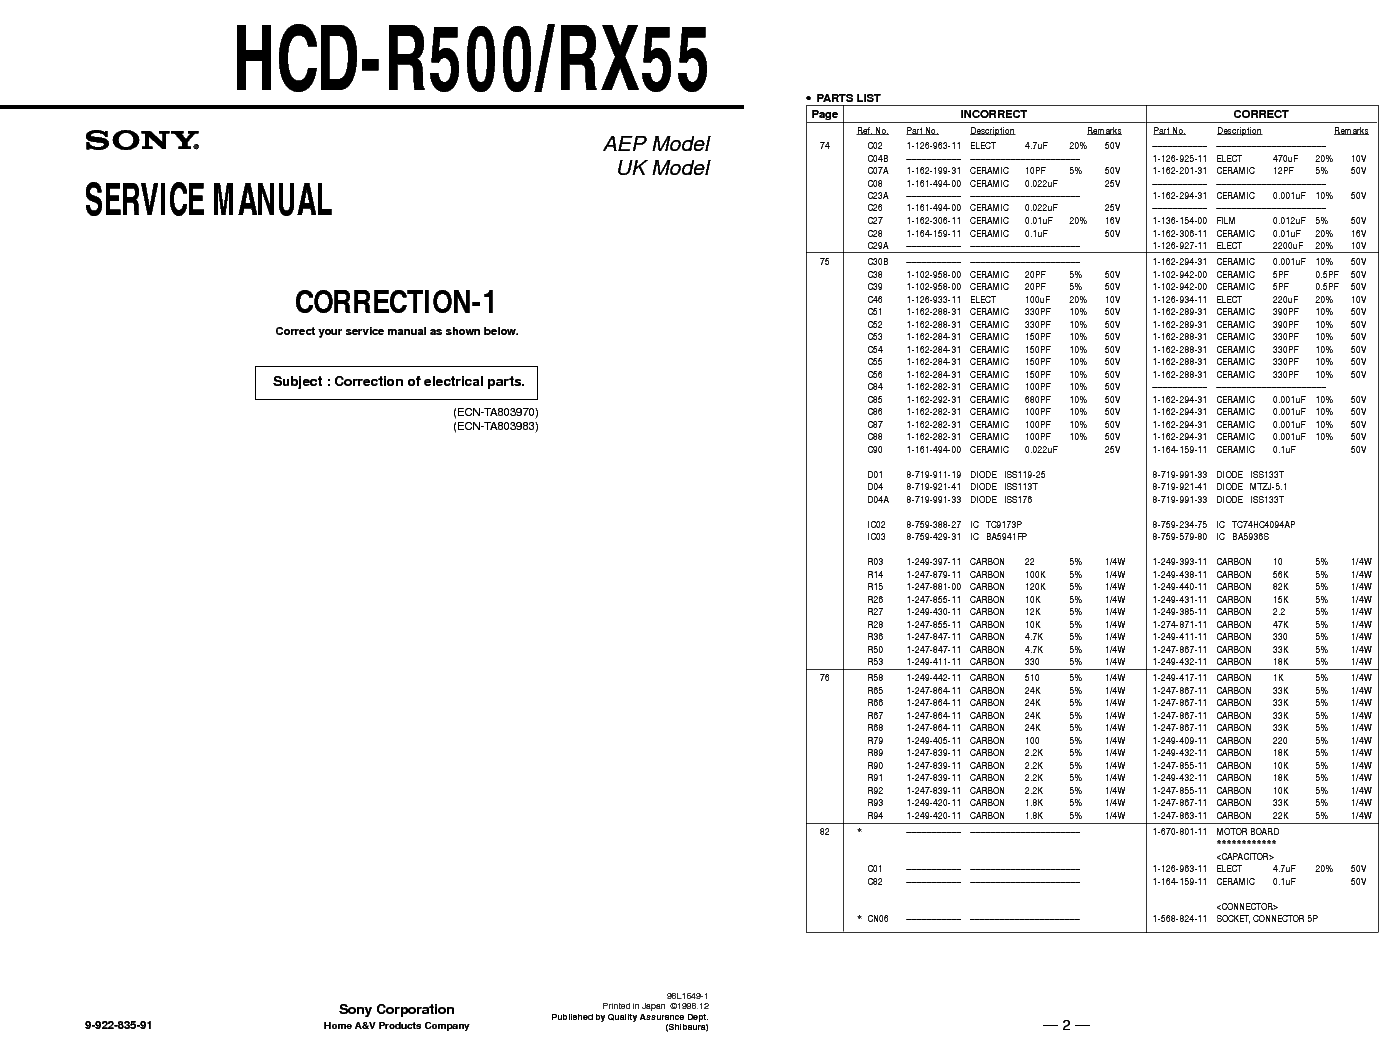 SONY HCD-R500 RX55 SCH service manual (1st page)